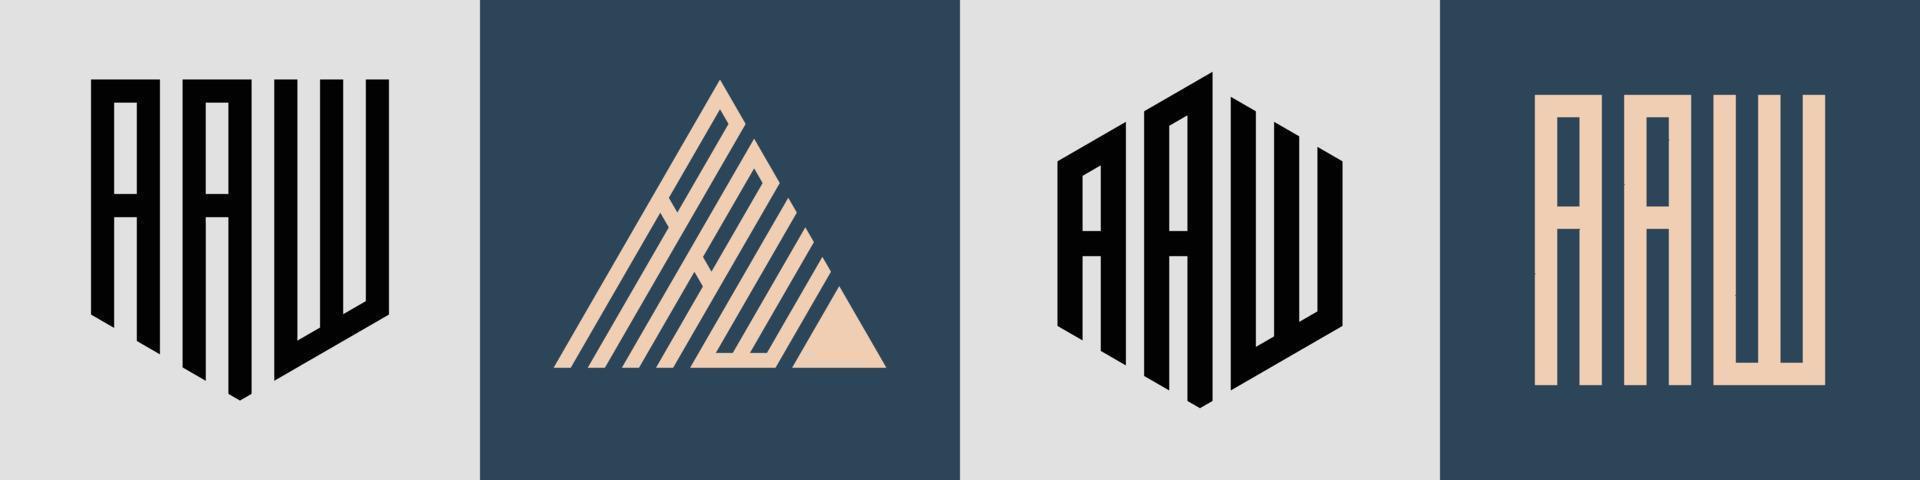 kreativa enkla initiala bokstäver aaw logotyp design bunt. vektor